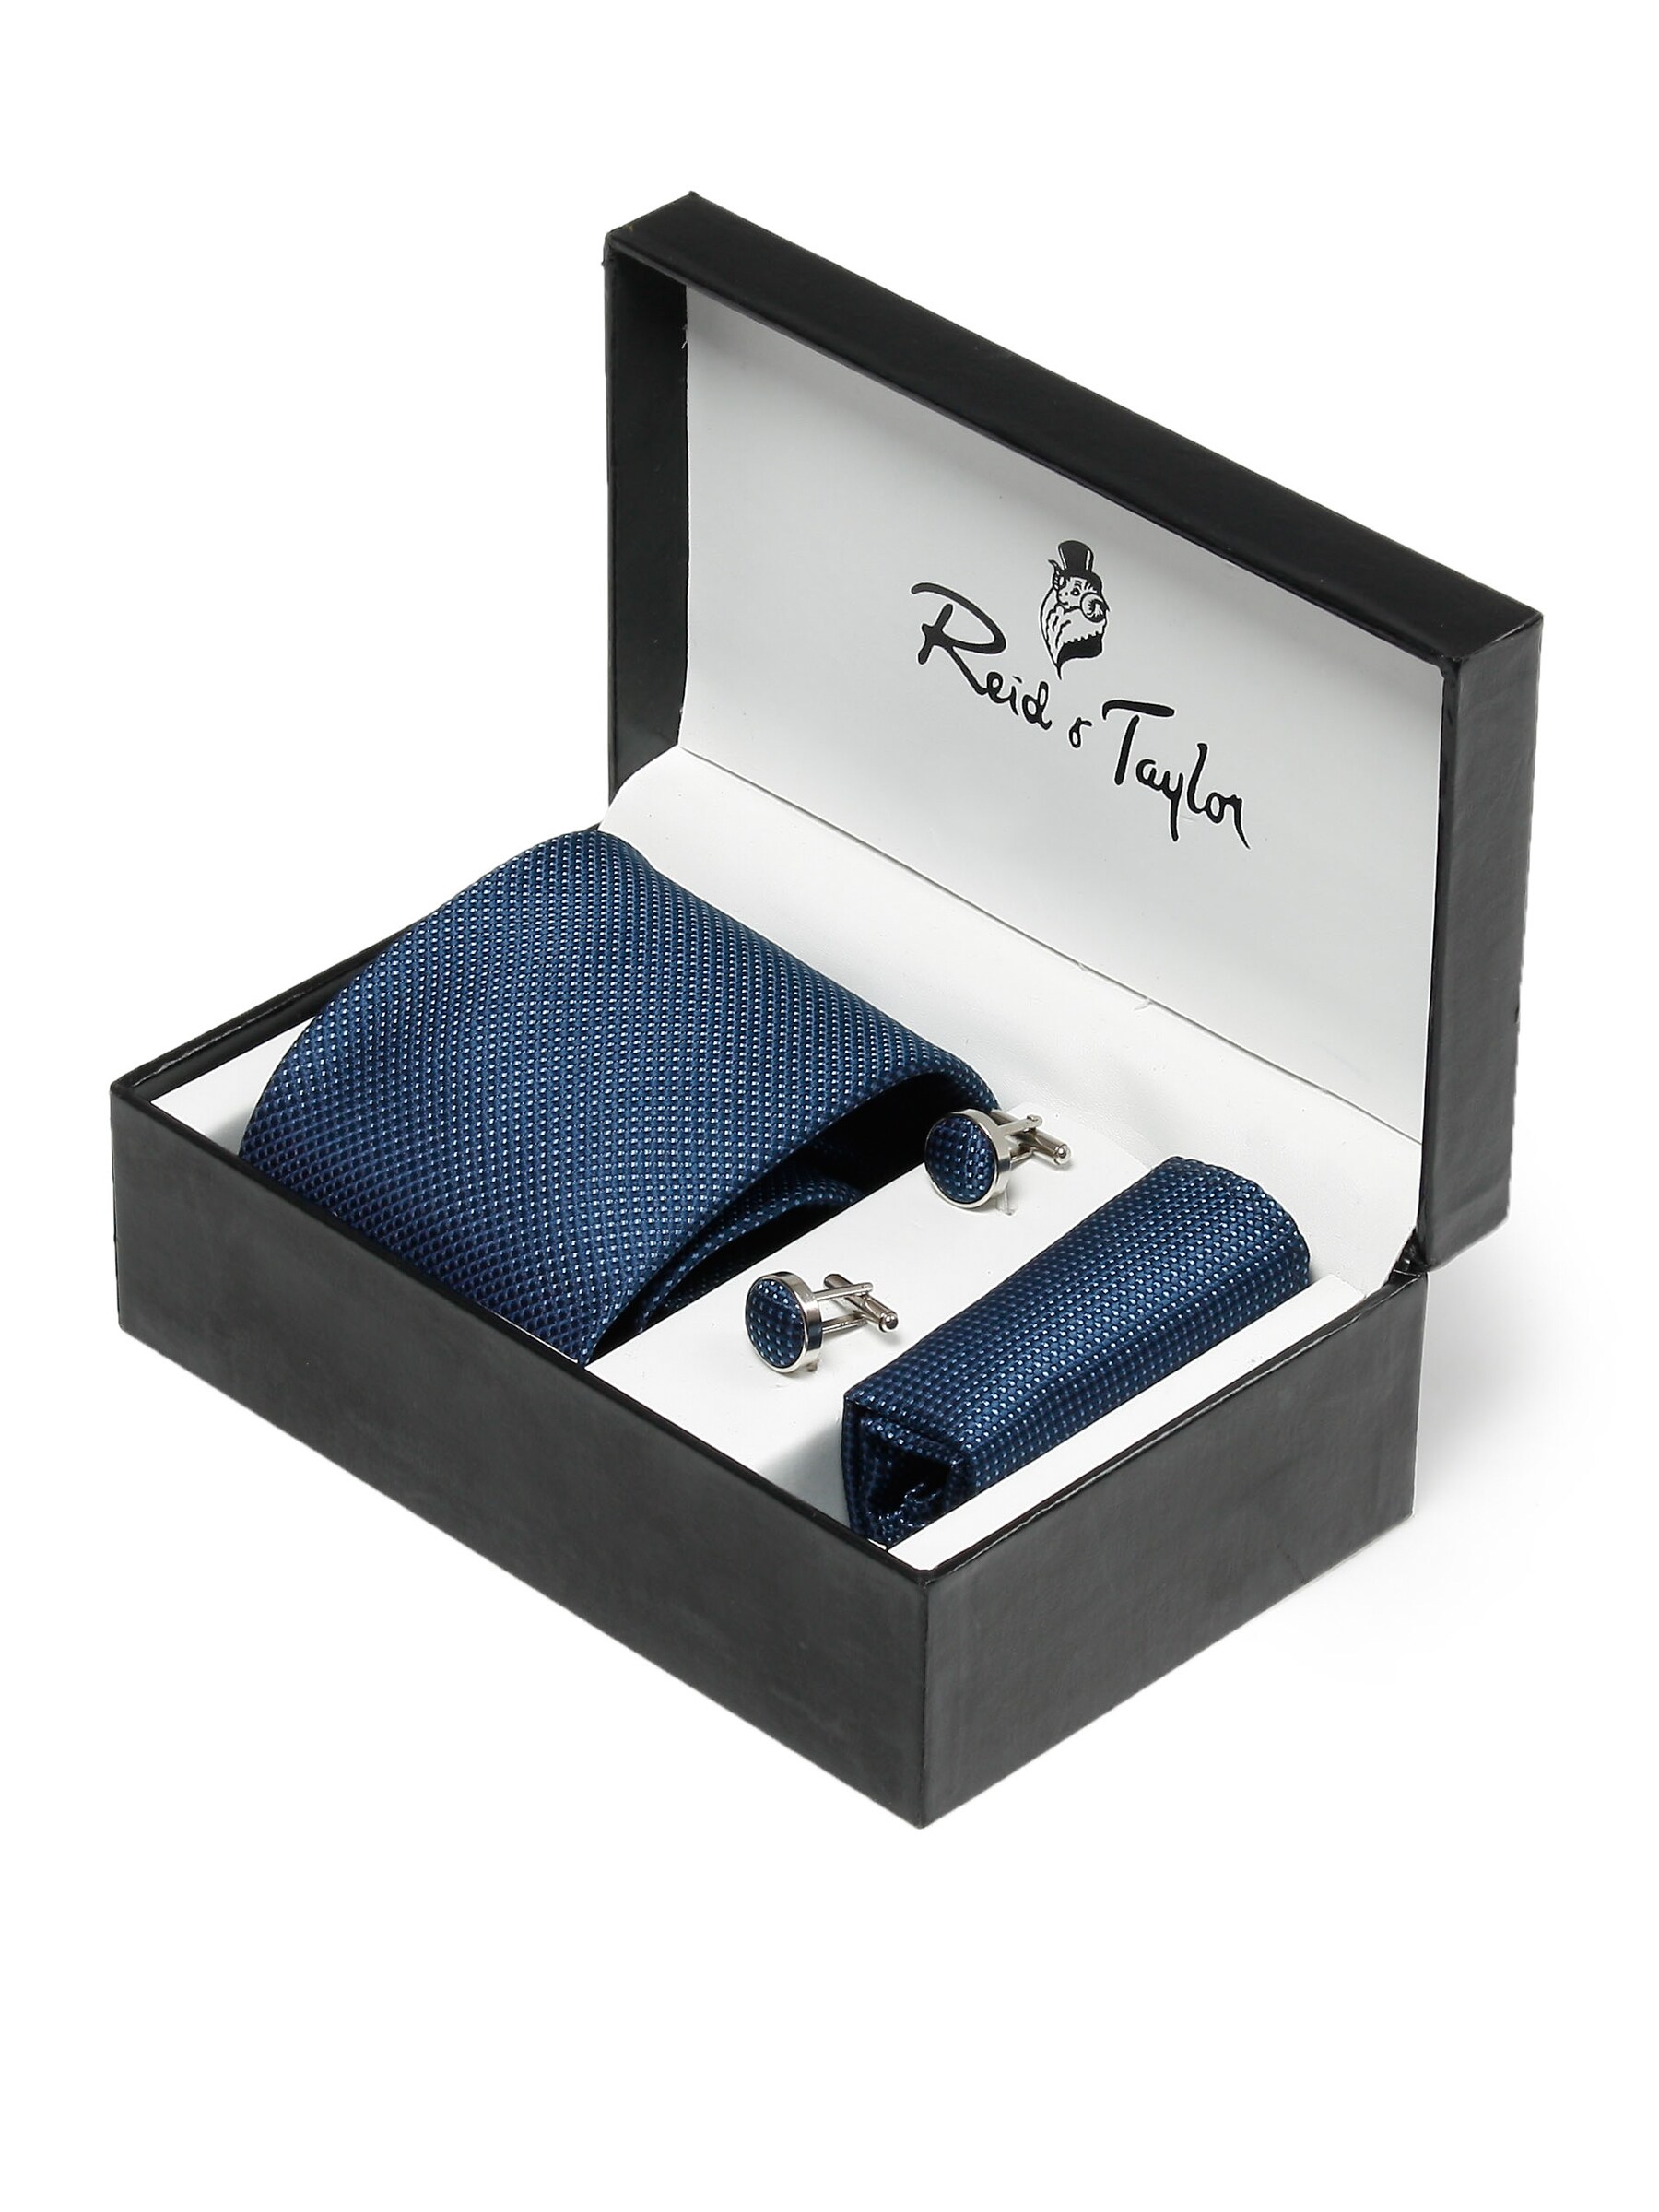 Reid & Taylor Men Formal Blue Tie+Cufflink+Pocket square - Combo Pack